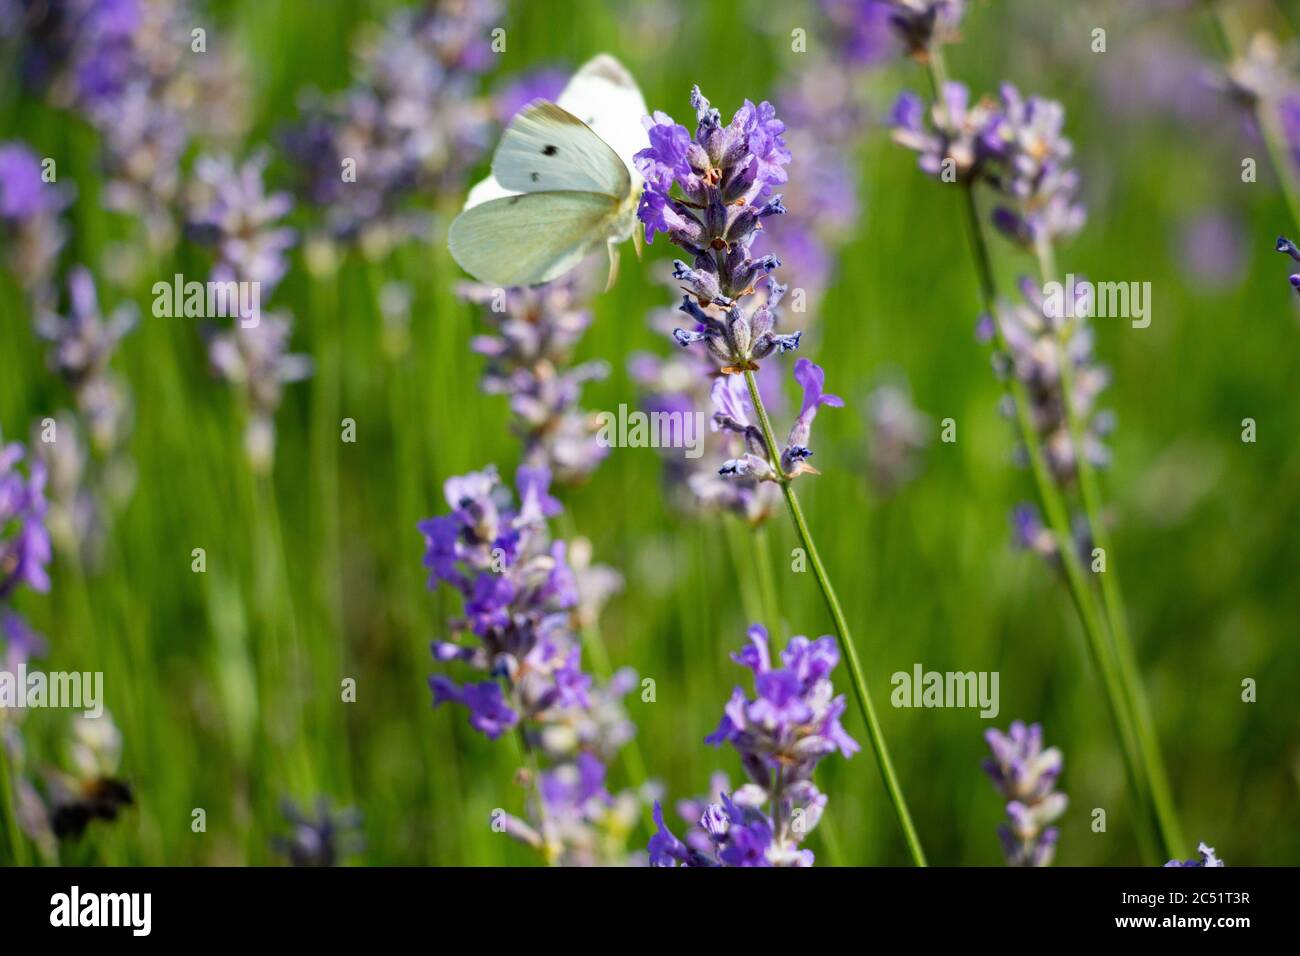 Una farfalla bianca si siede su una lavanda viola. Foto Stock